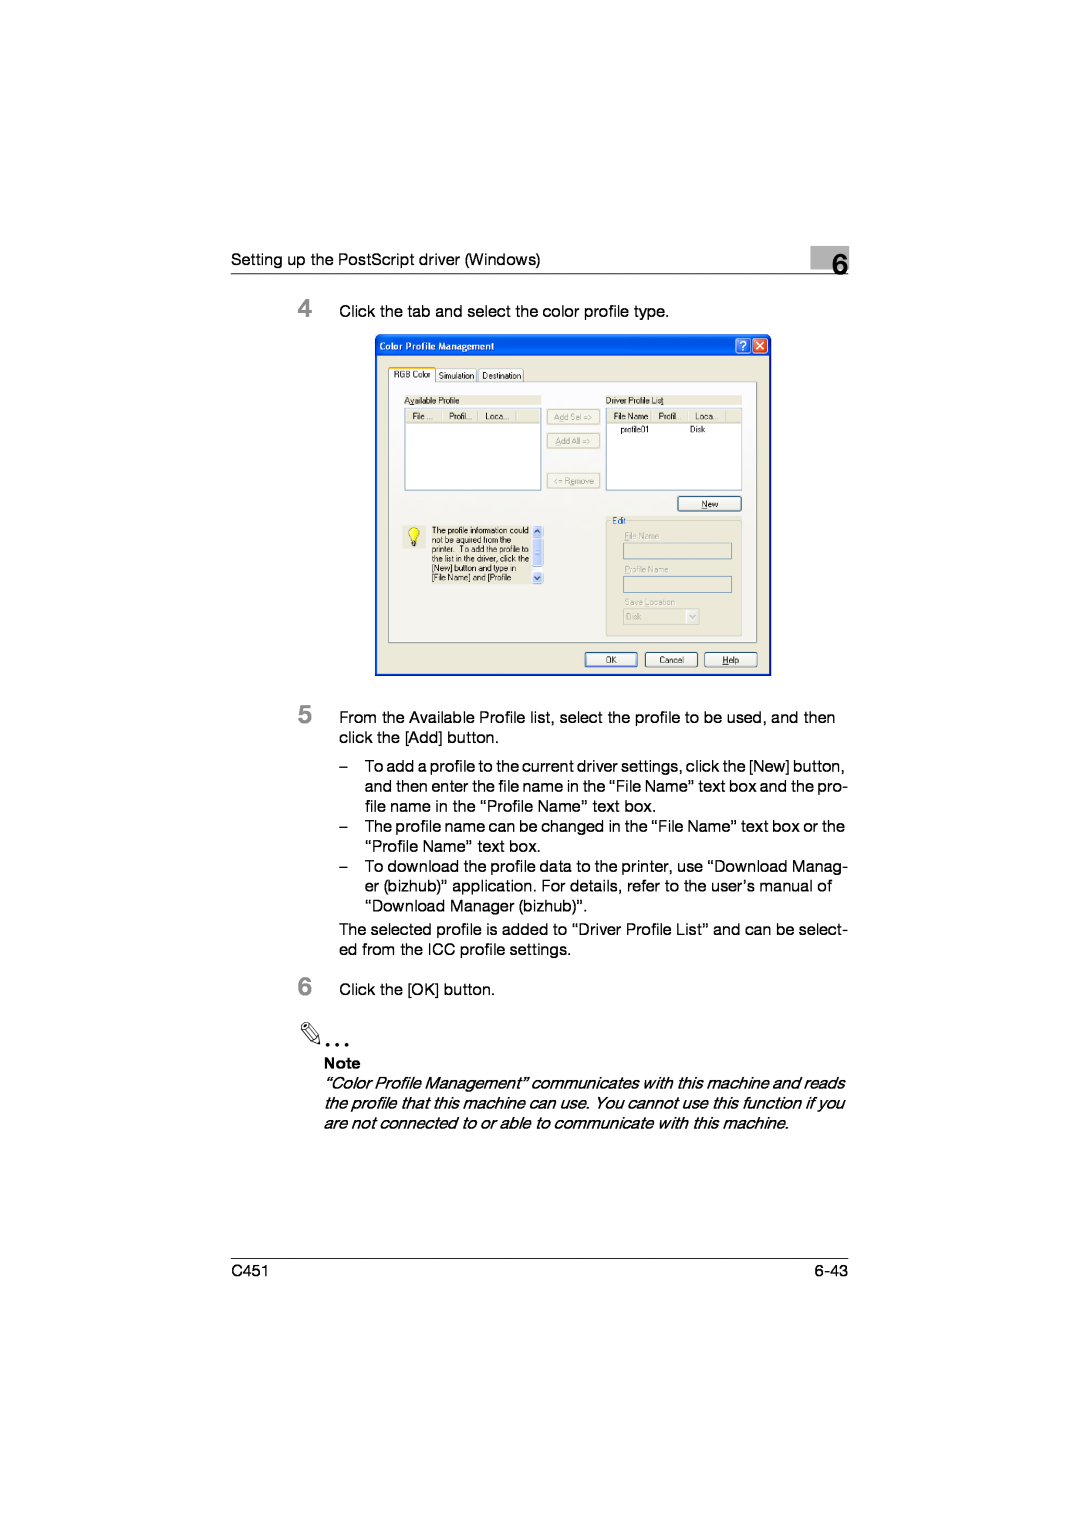 Konica Minolta C451 manual Setting up the PostScript driver Windows 